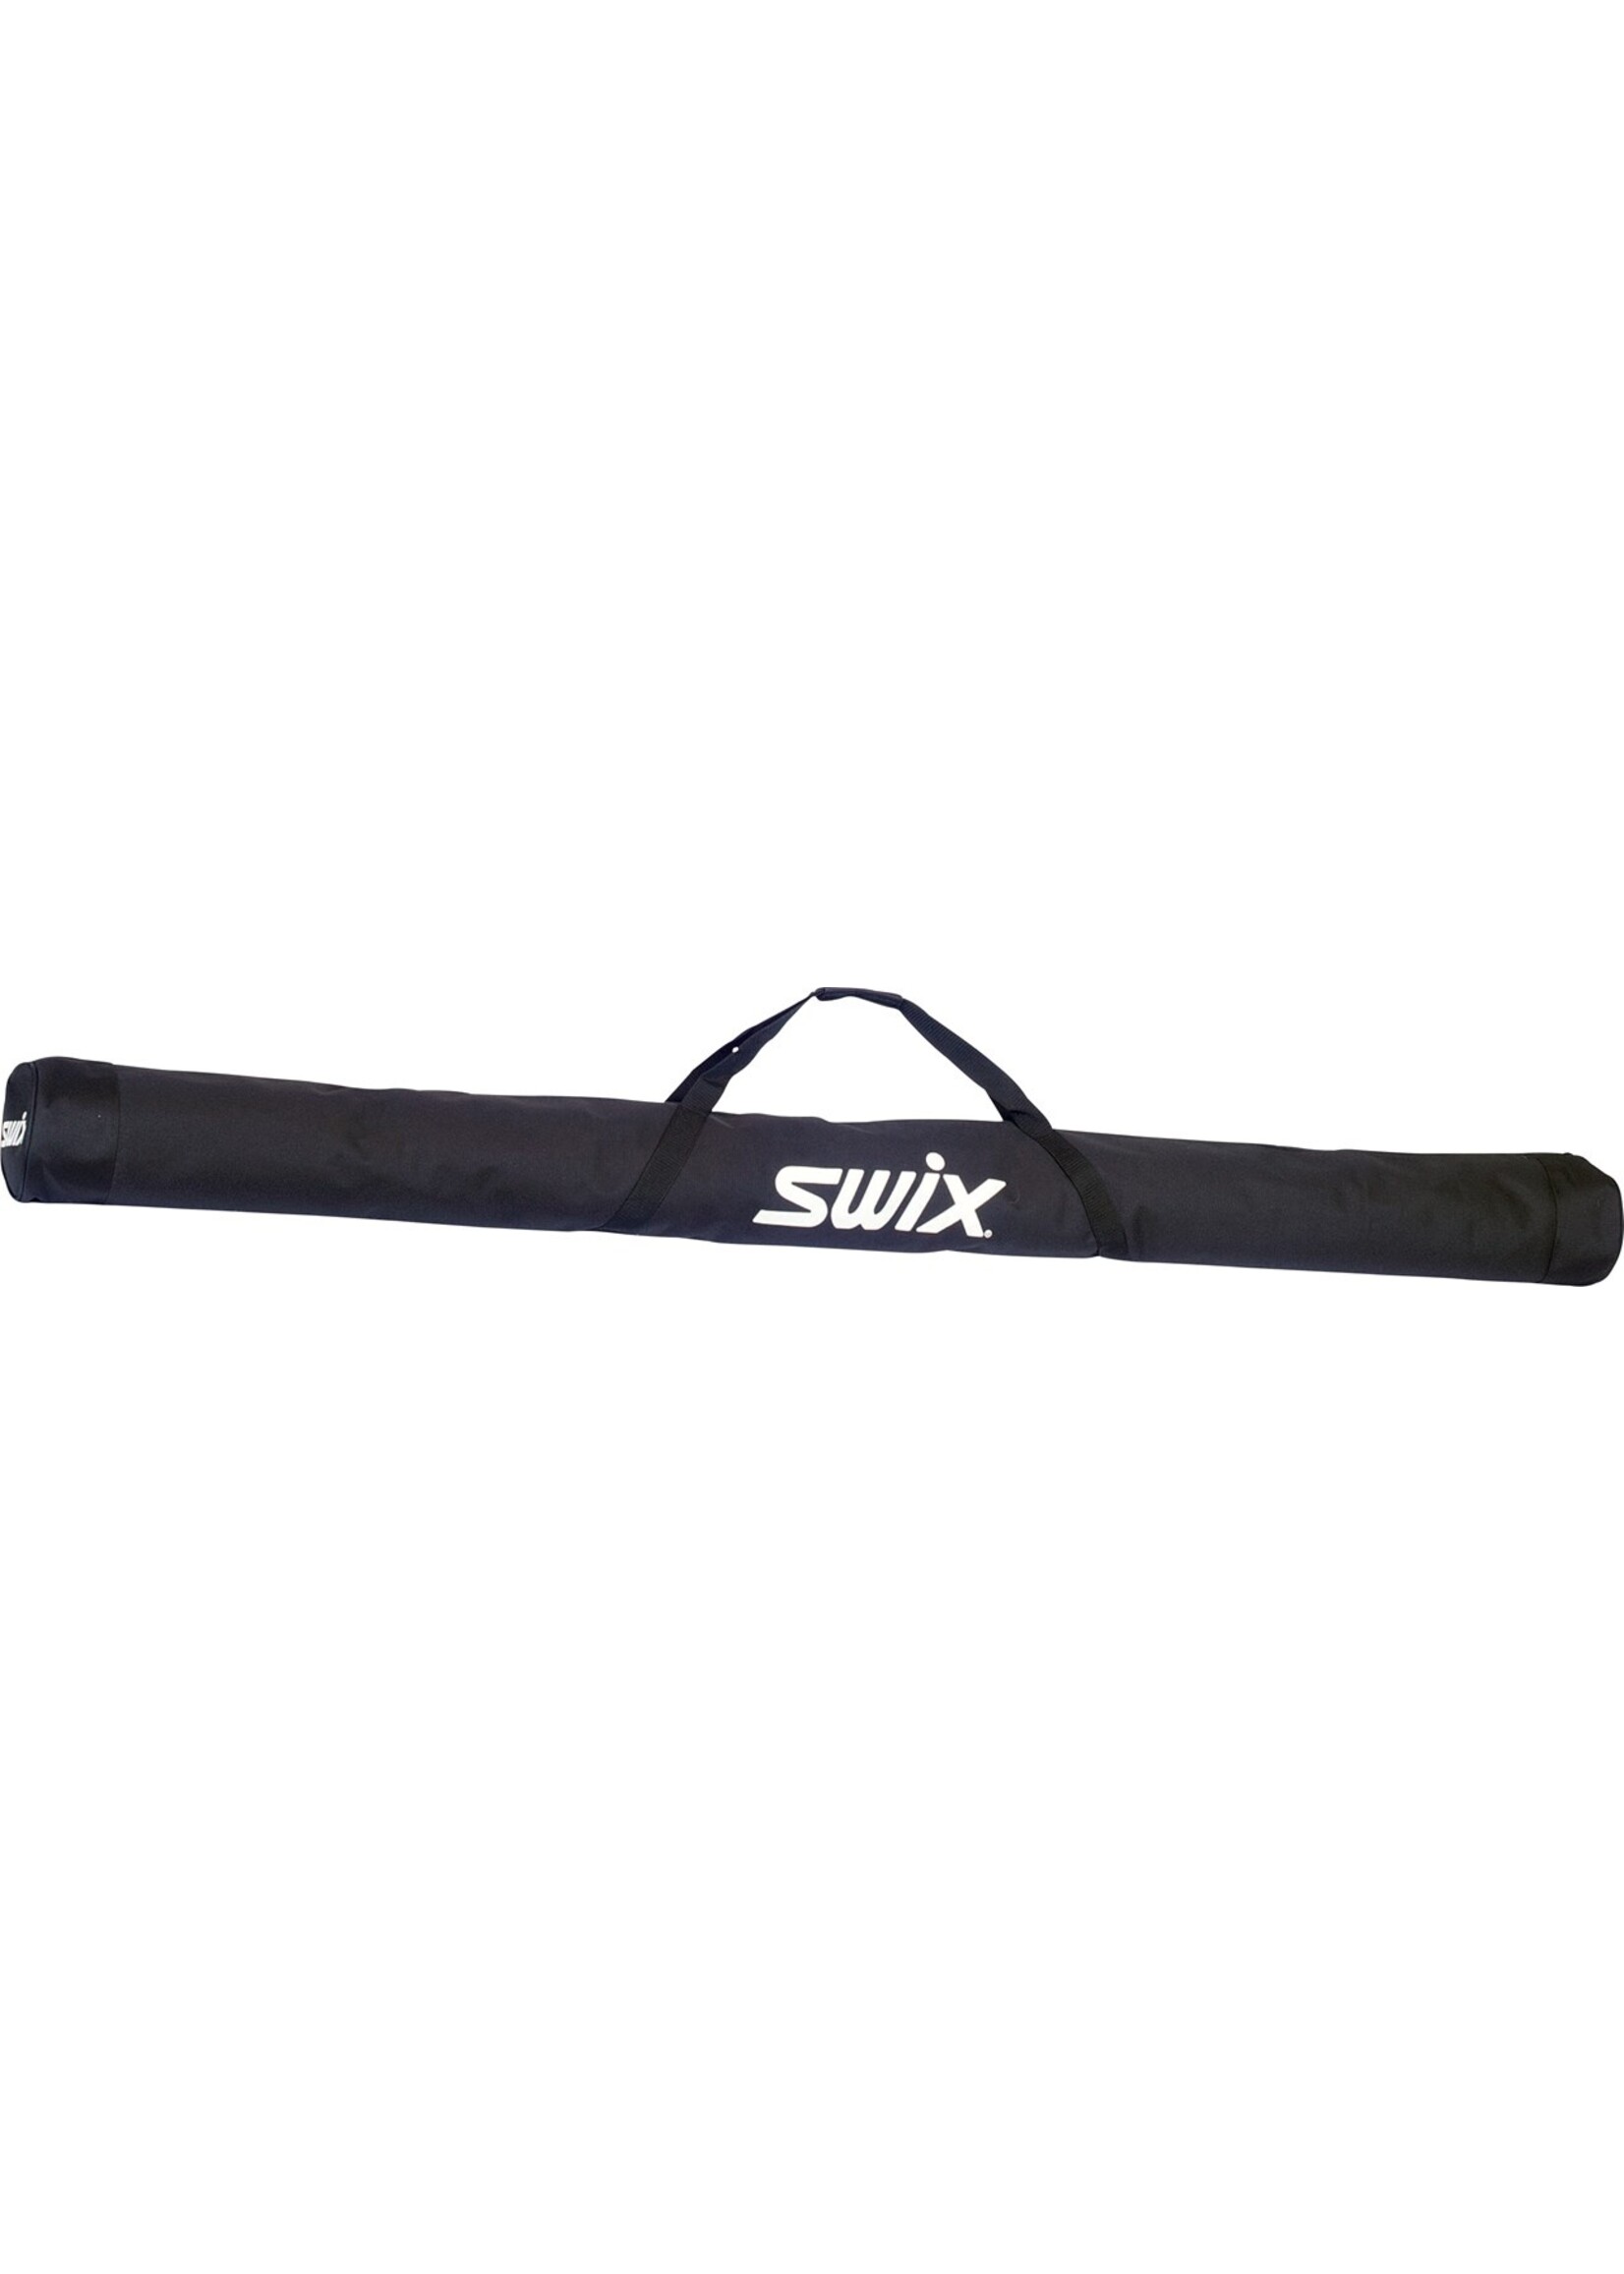 Swix Swix Nordic Single Ski Bag - 218 cm